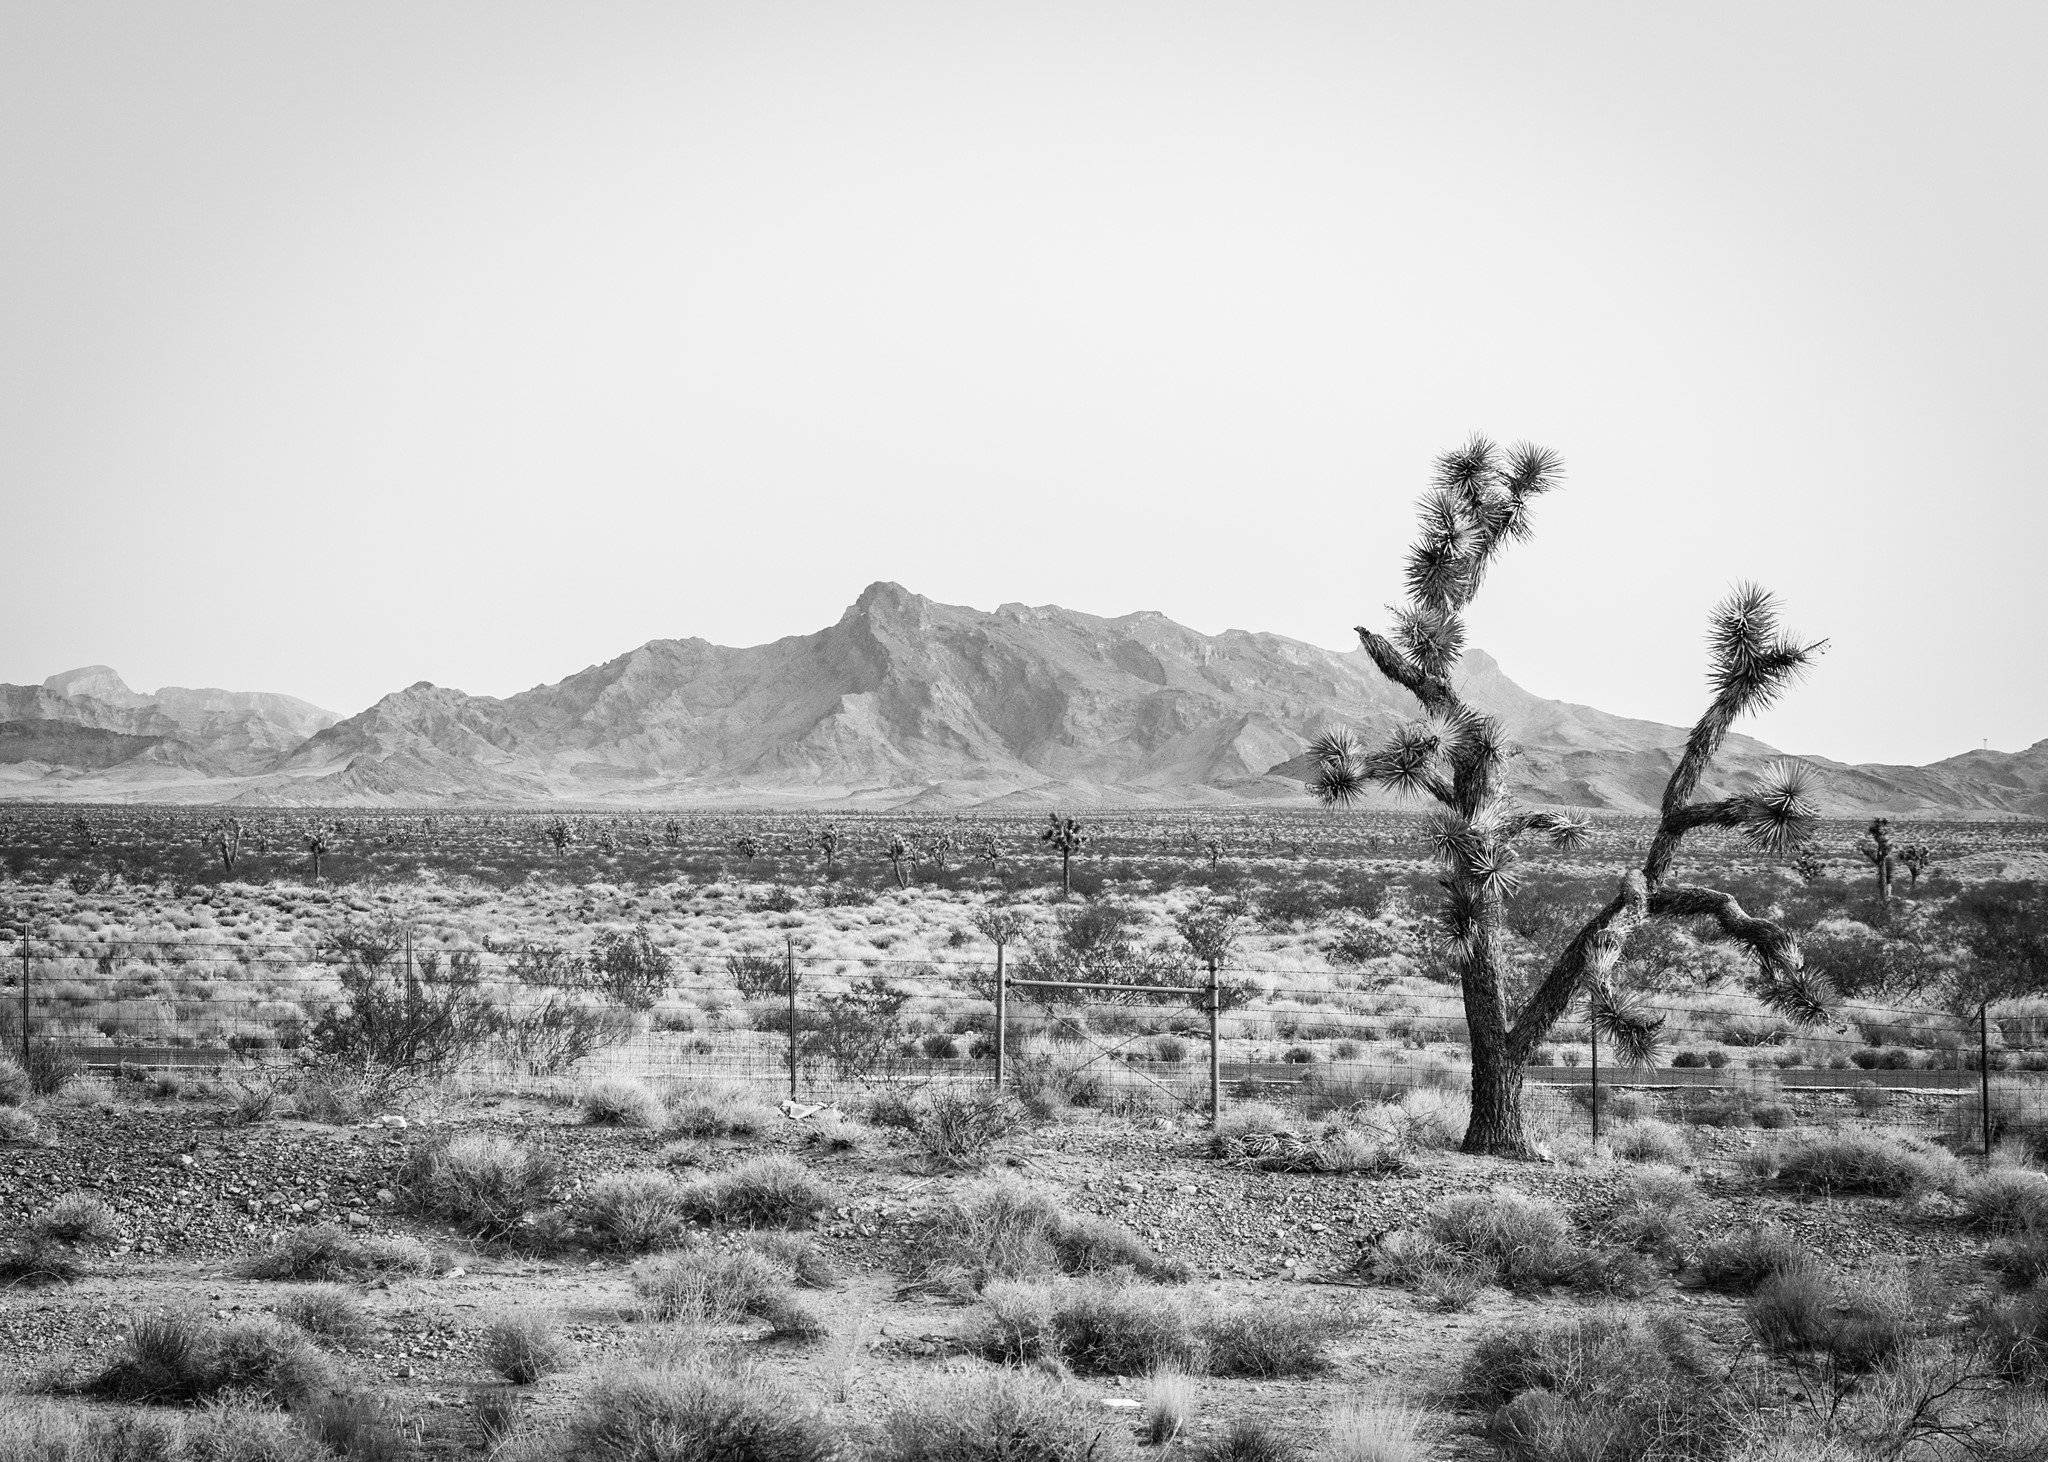 Joshua trees on the road back to Vegas